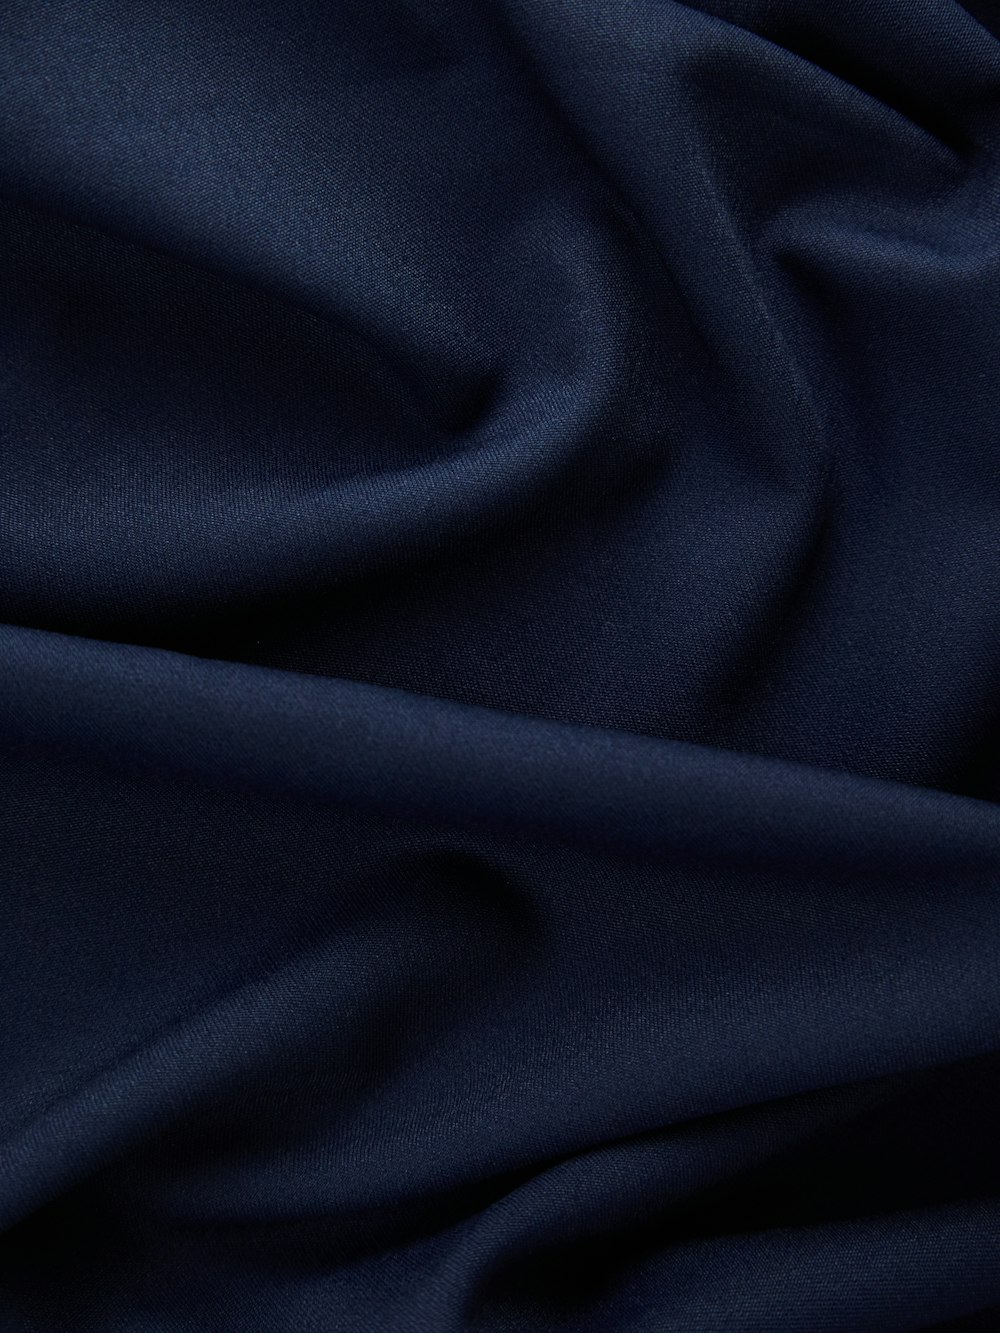 a close up of a dark blue fabric